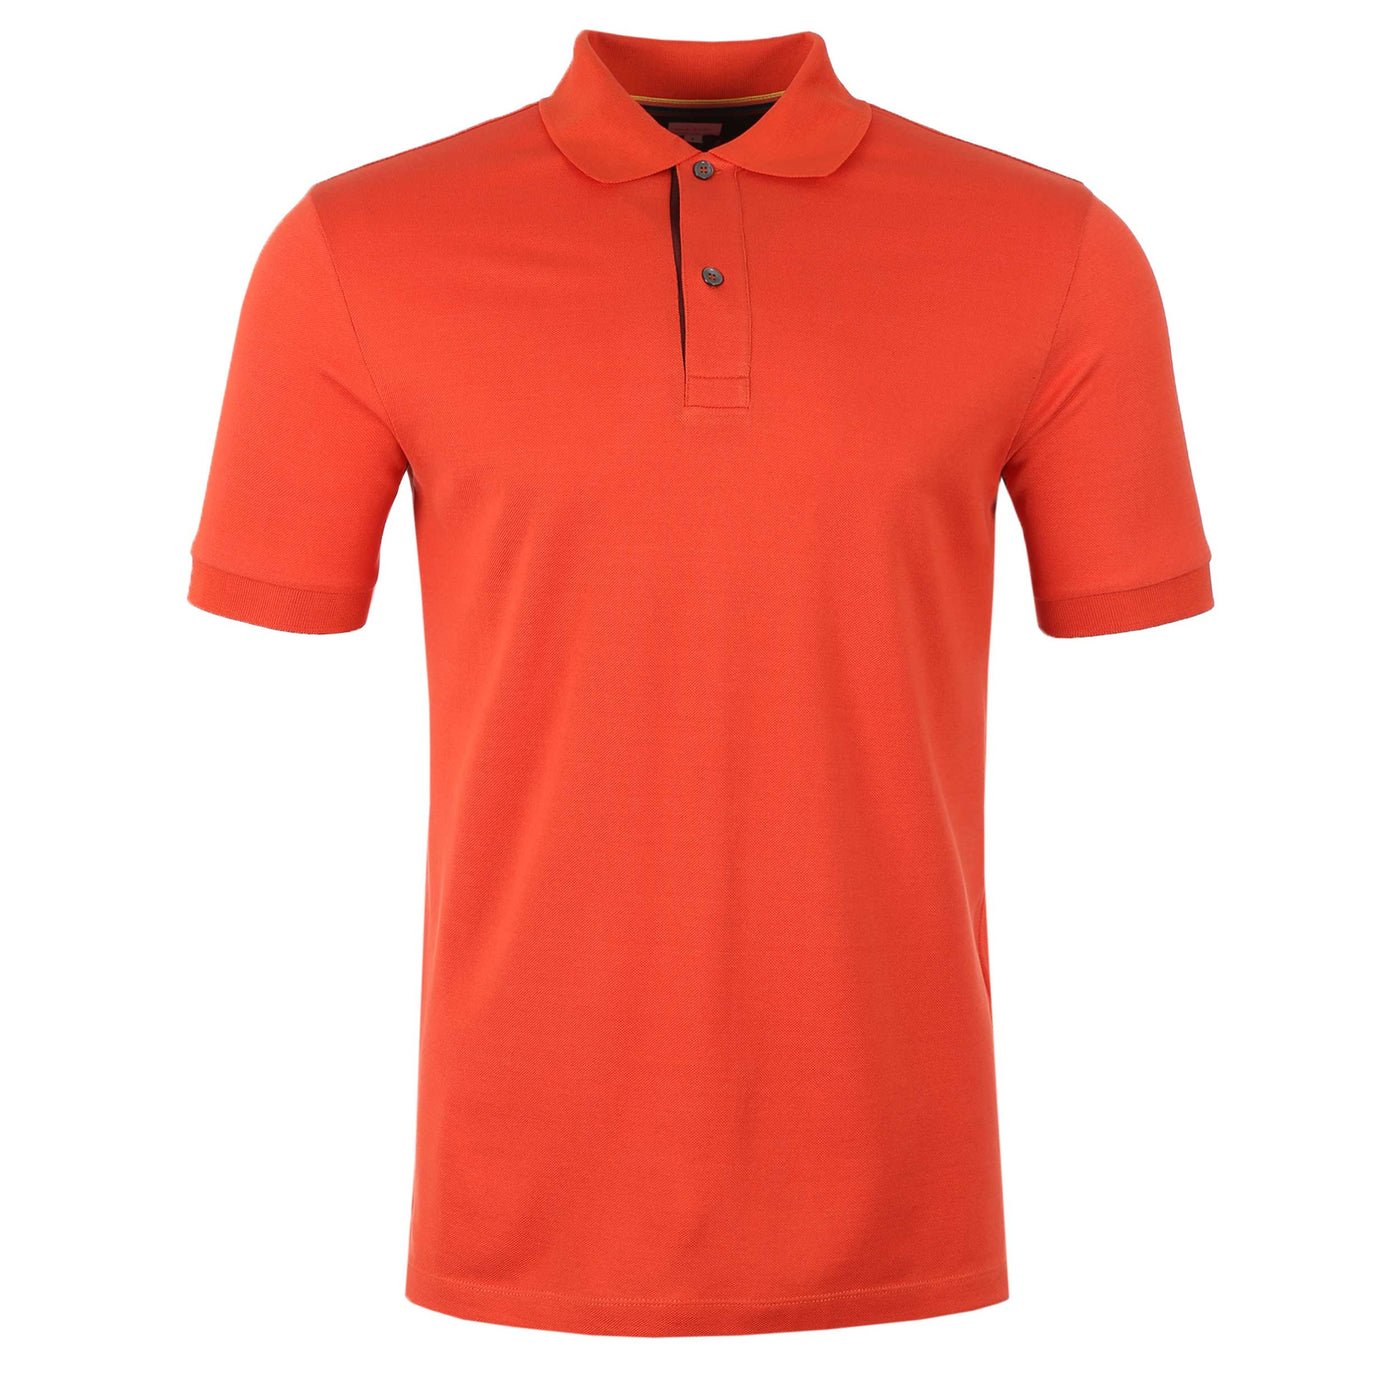 Paul Smith Placket Polo Shirt in Orange